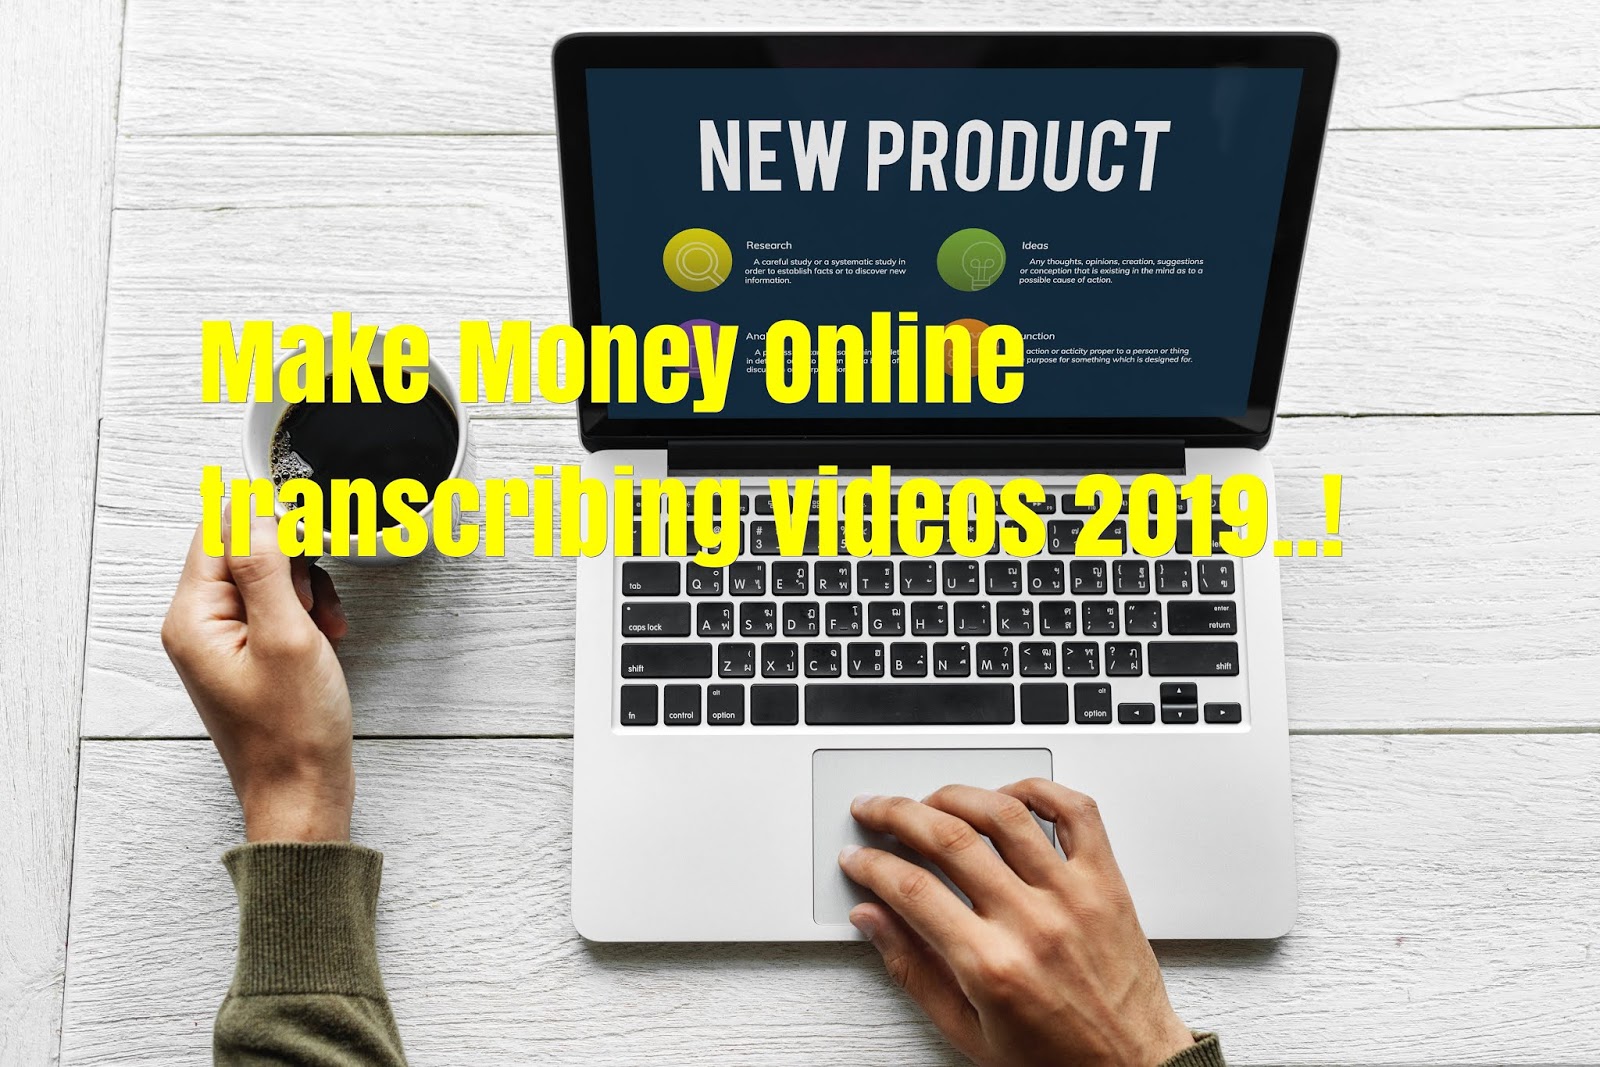 Make Money Online transcribing videos 2019